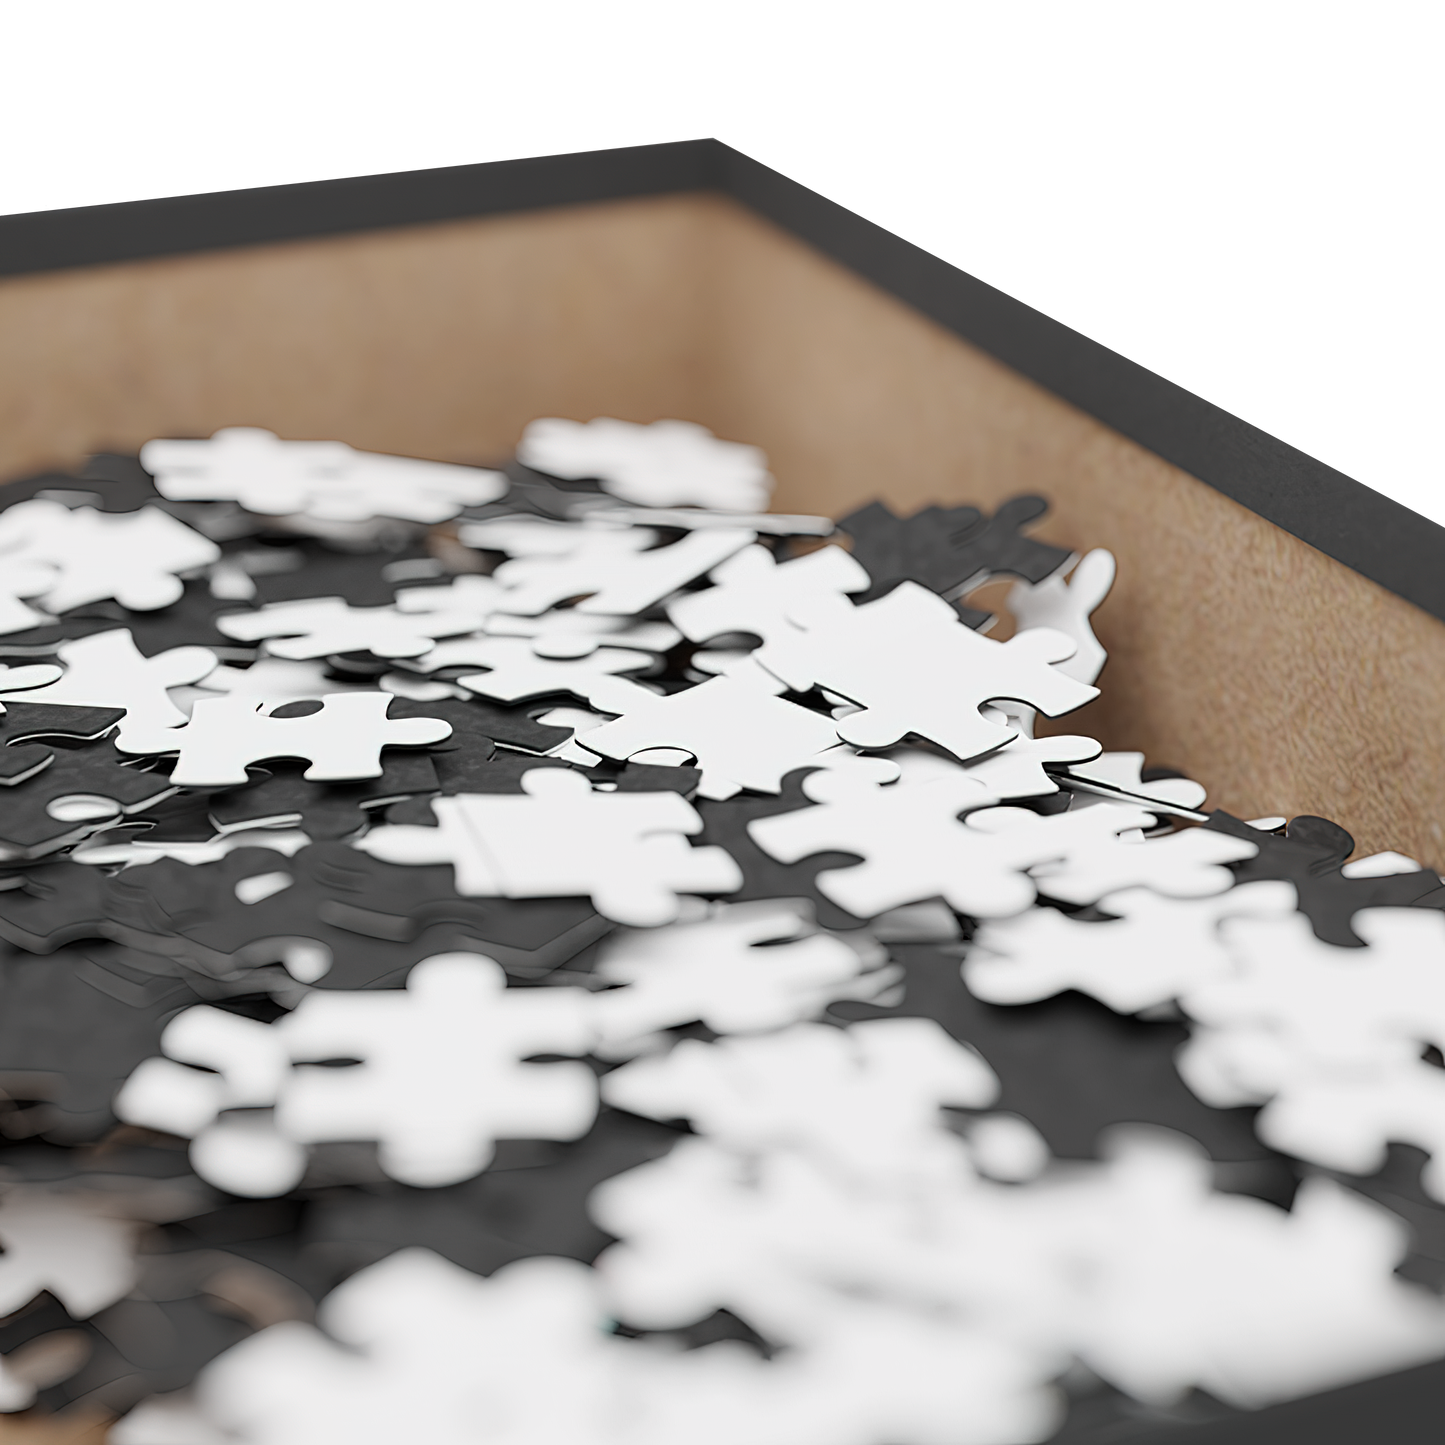 Vigil - Premium Jigsaw Puzzle, Ornate, Detailed - Multiple Sizes Available